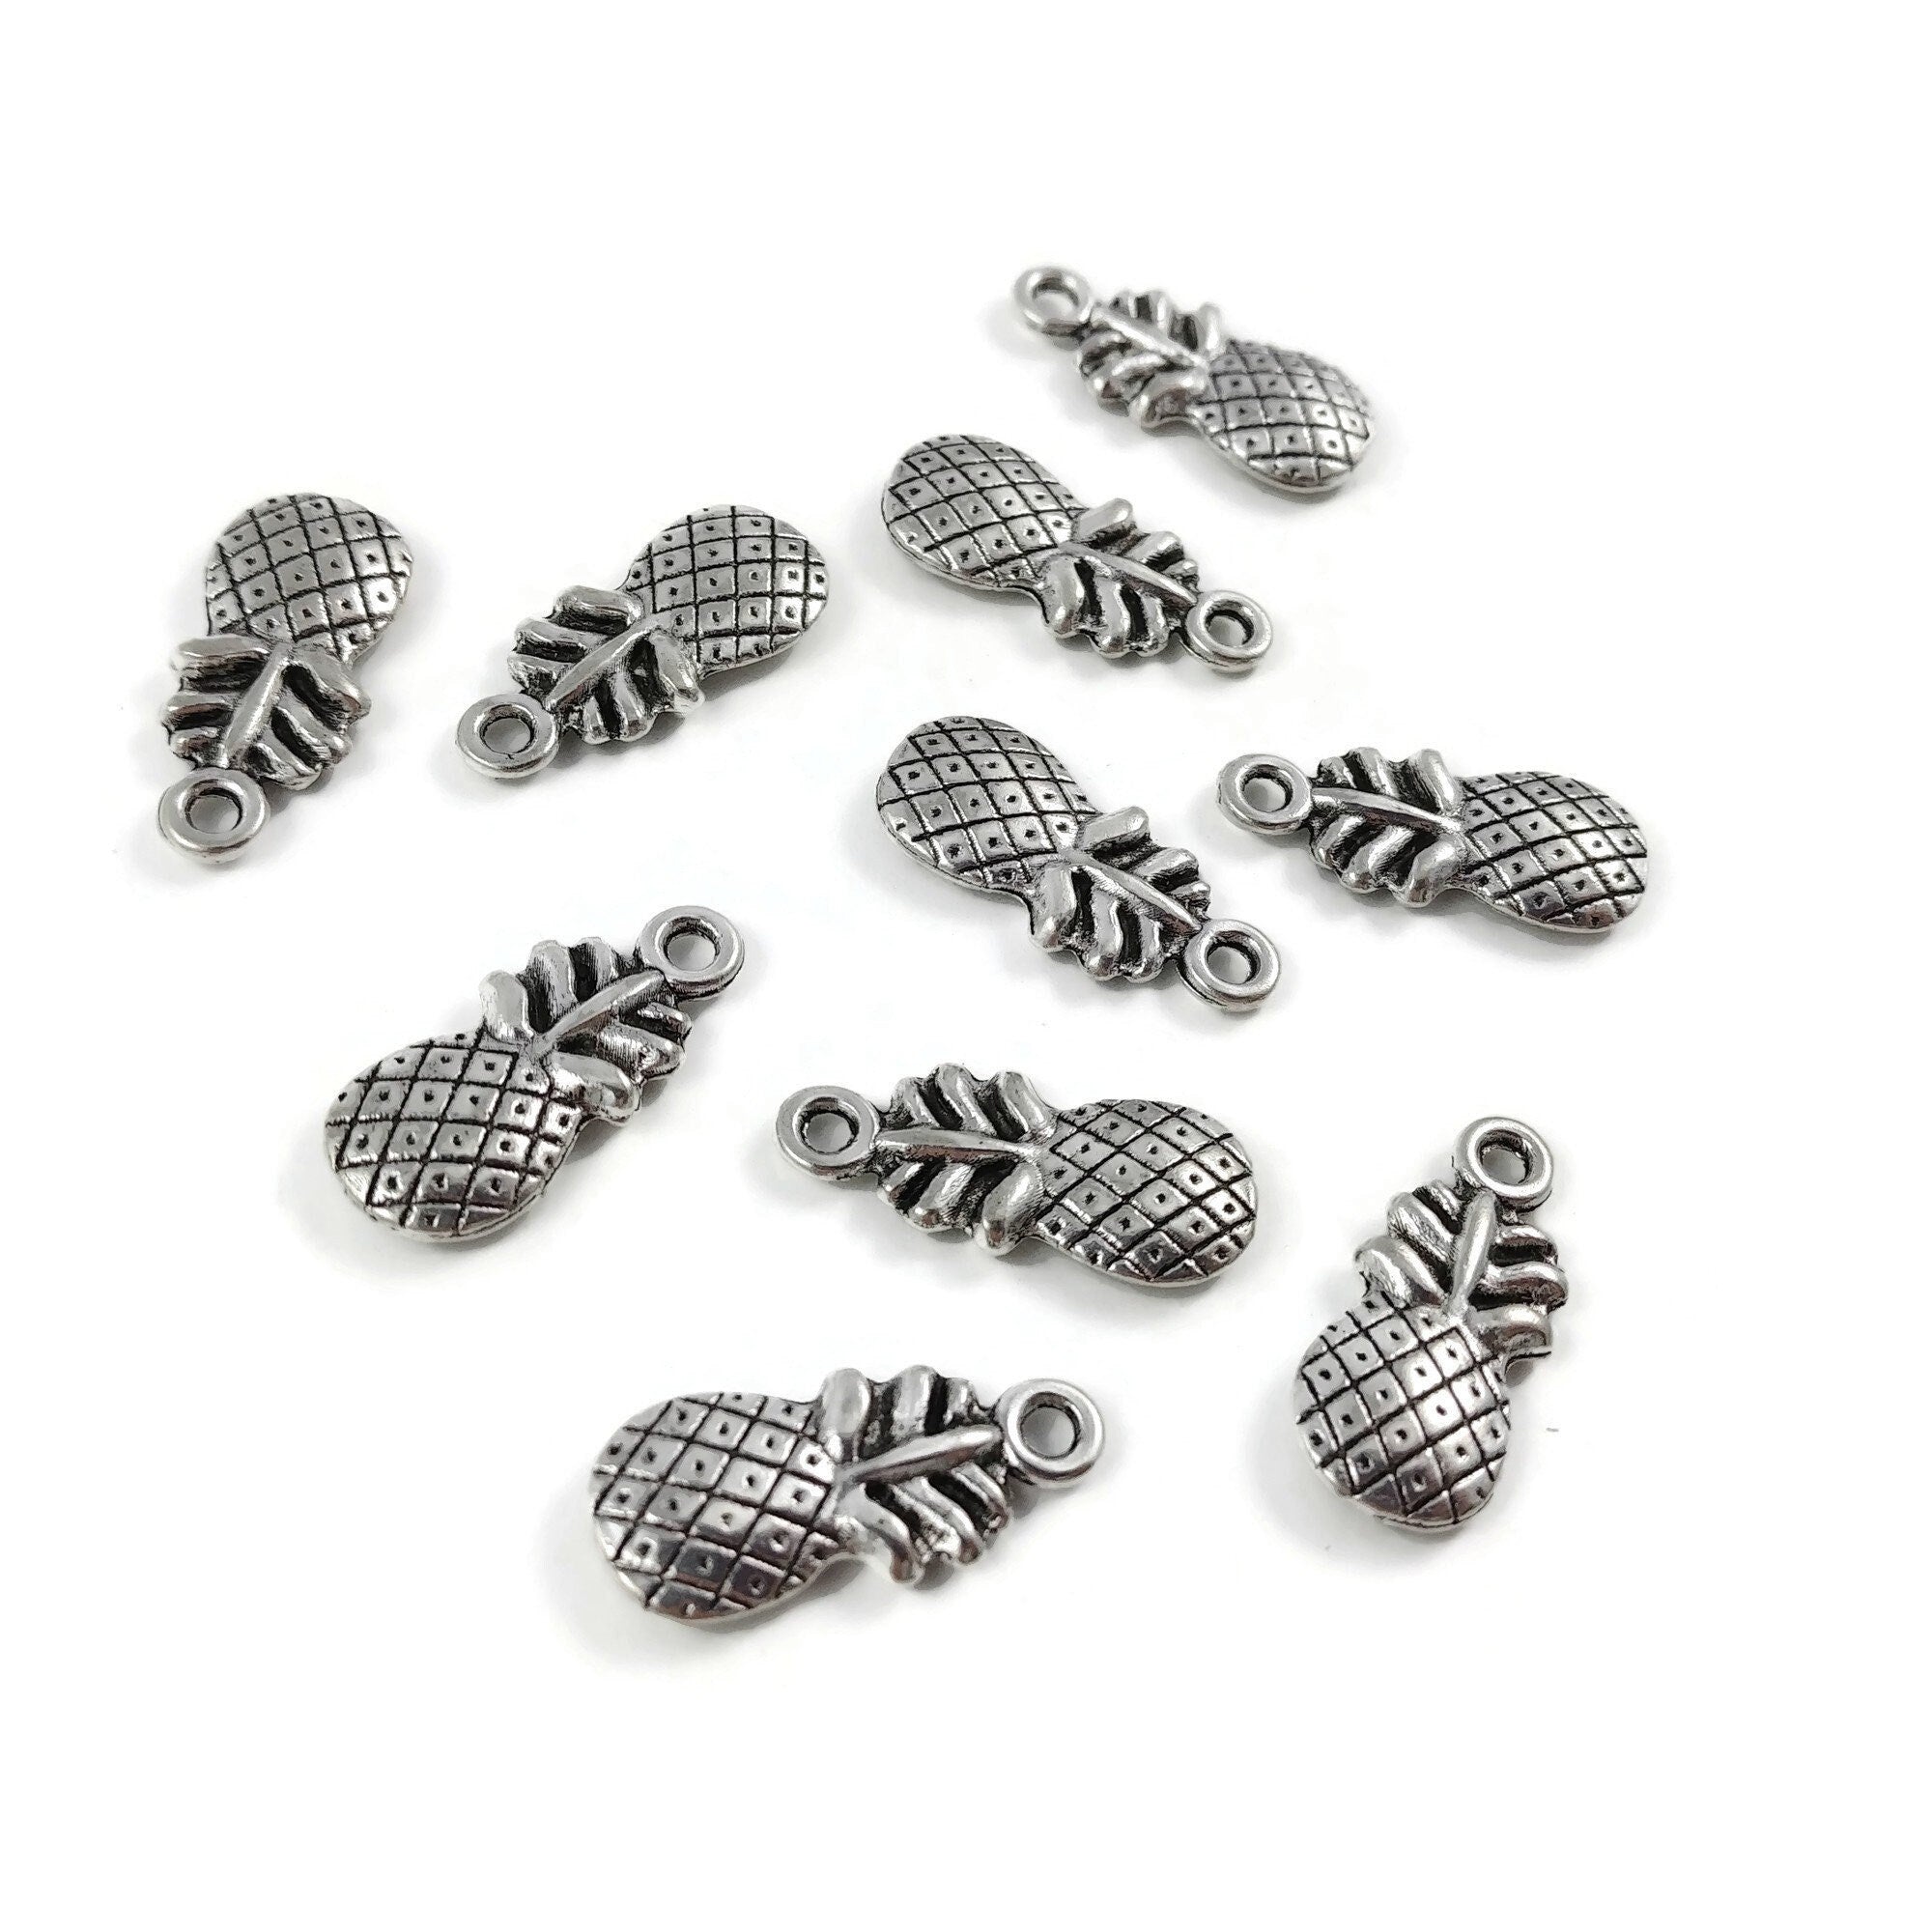 Fun pineapple charms, 20mm nickel free pendants for jewelry making